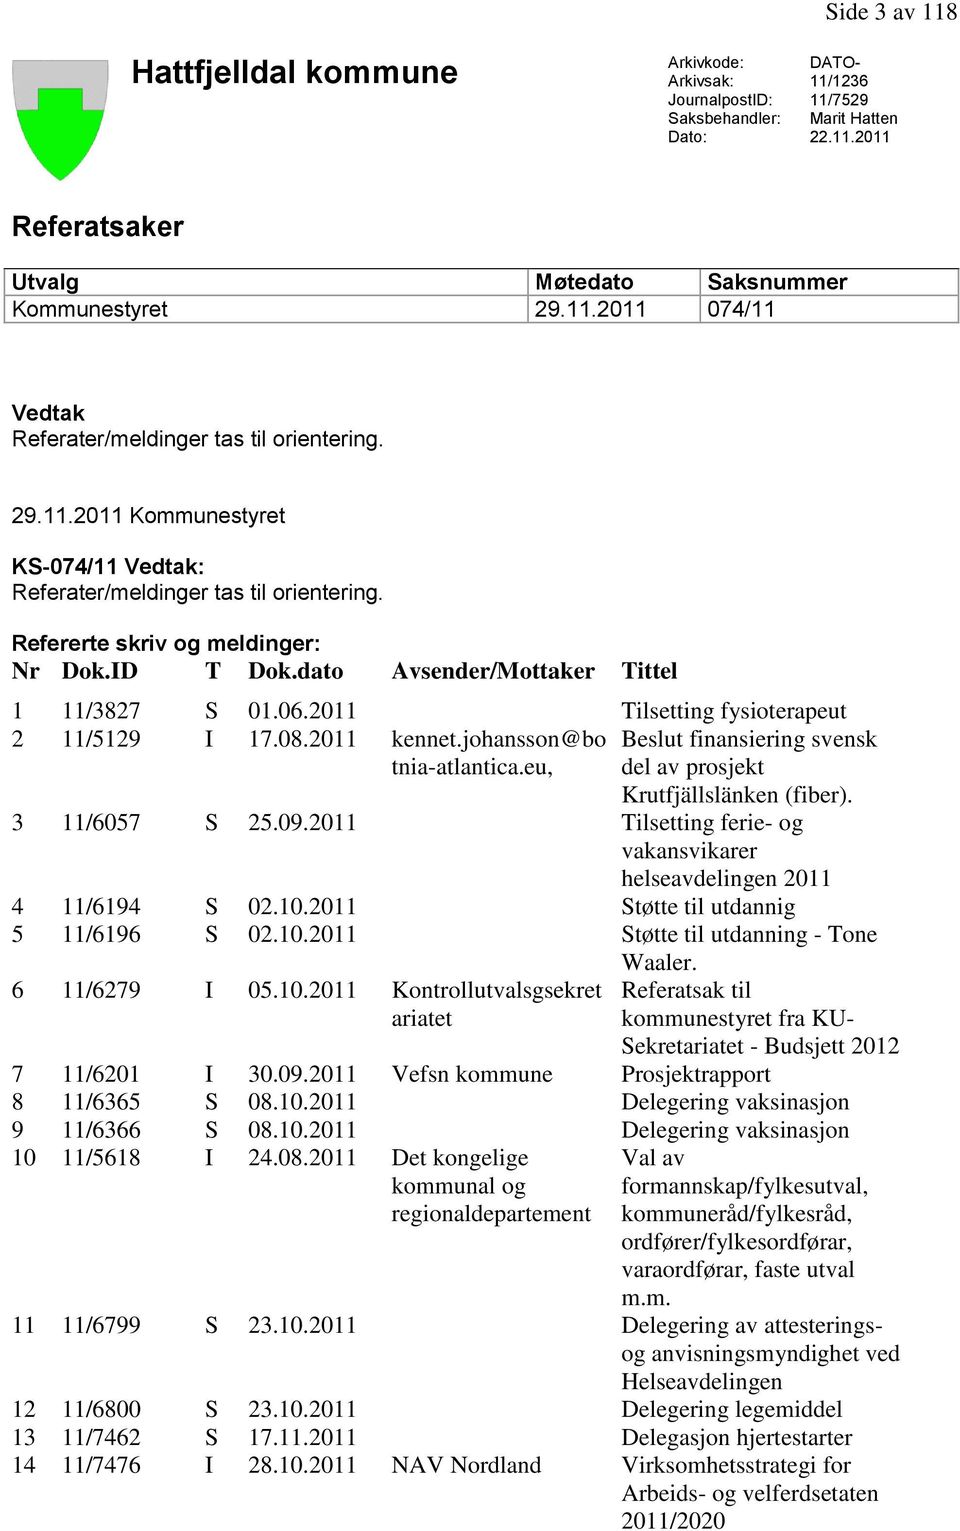 2011 Tilsetting fysioterapeut 2 11/5129 I 17.08.2011 kennet.johansson@bo tnia-atlantica.eu, Beslut finansiering svensk del av prosjekt Krutfjällslänken (fiber). 3 11/6057 S 25.09.